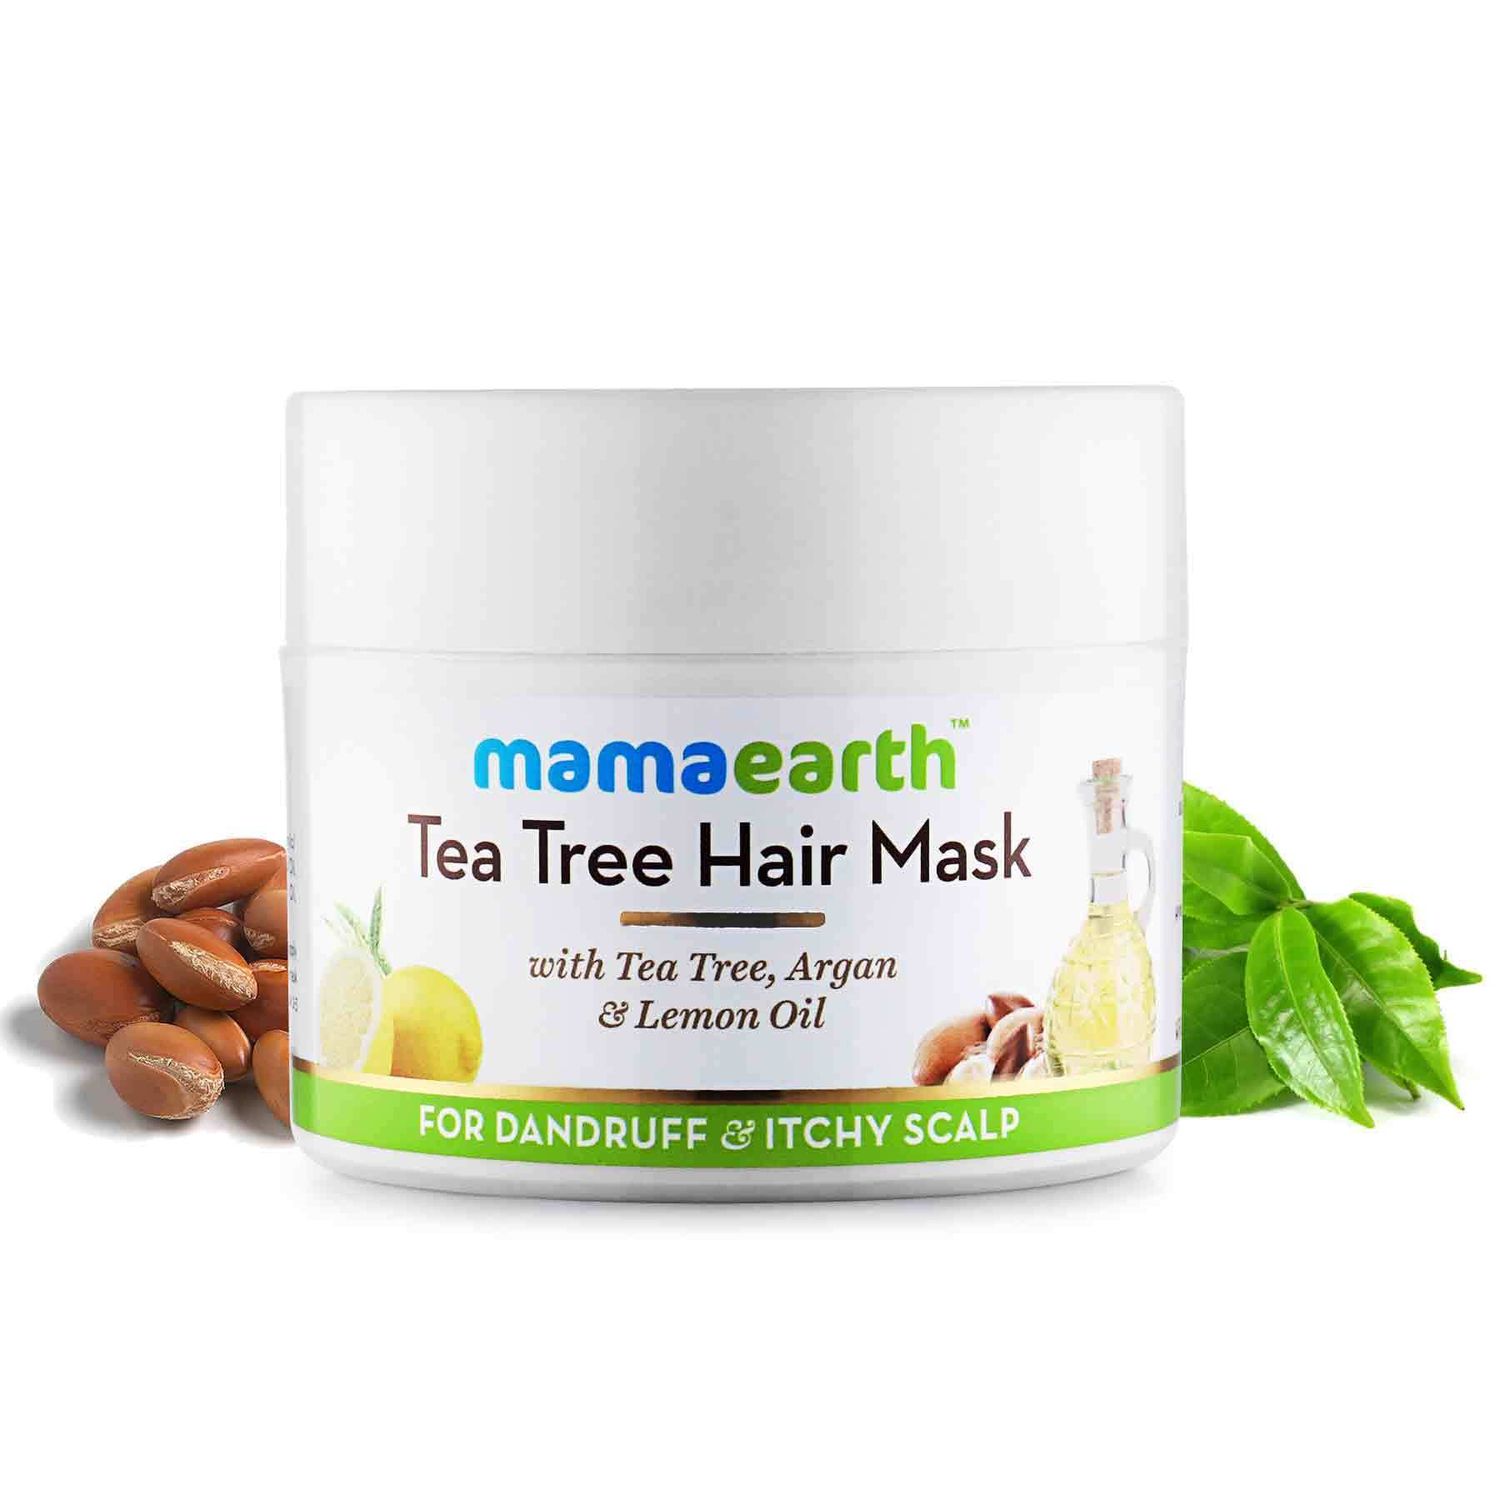 Buy Mamaearth Anti Dandruff Tea Tree Hair Mask With Tea Tree And Lemon Oil For Danrduff Control And Itch Treatement (200 ml) - Purplle